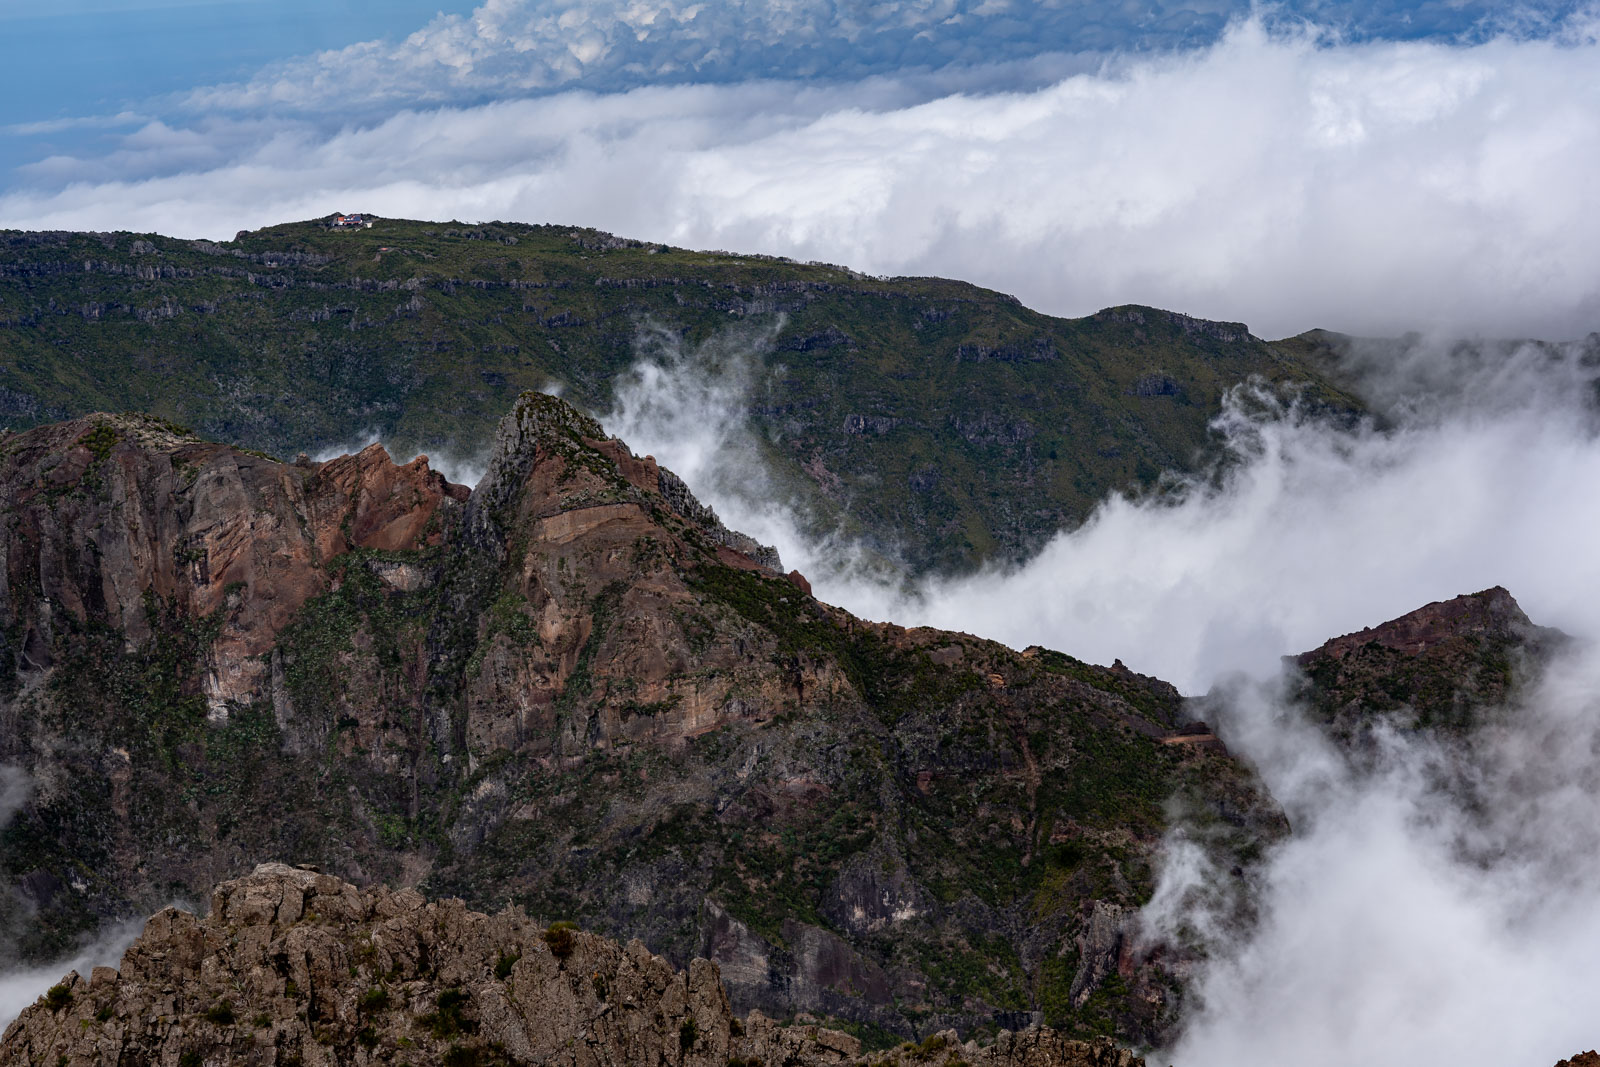 Navigating the mist towards clarity - Fog at Pico do Areeiro Madeira